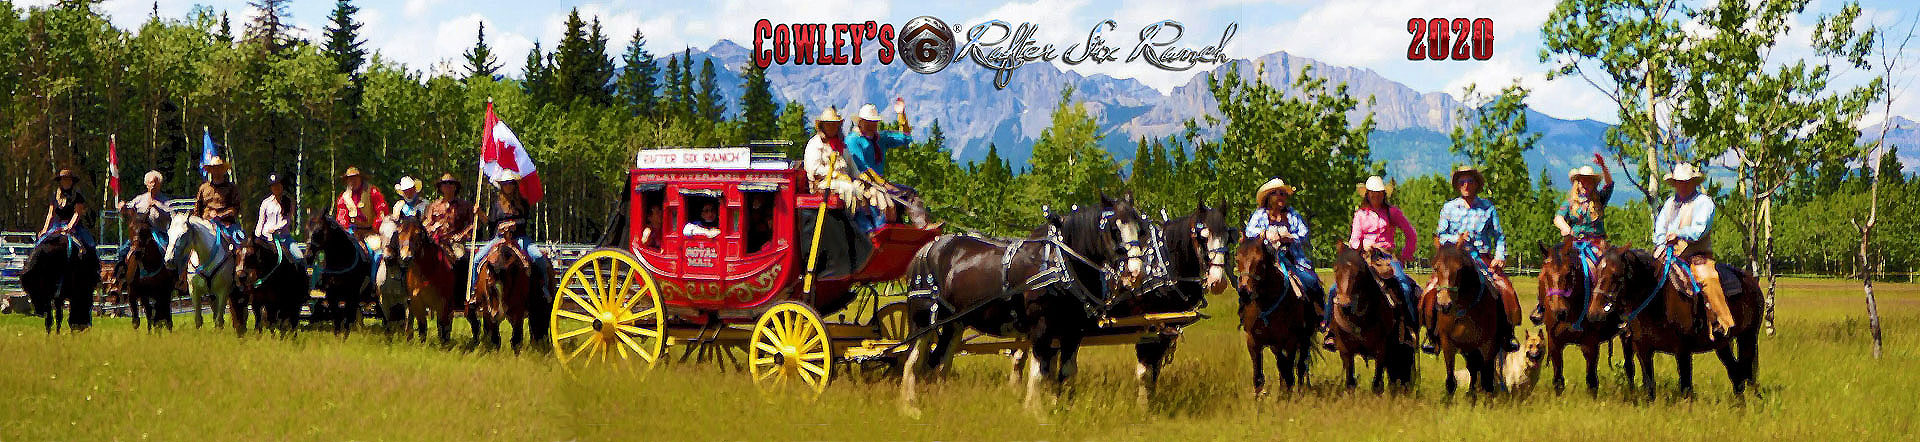 The Coulda Shoulda Woulda Stampede Parade 2020 At The Cowley's Rafter Six® Ranch!